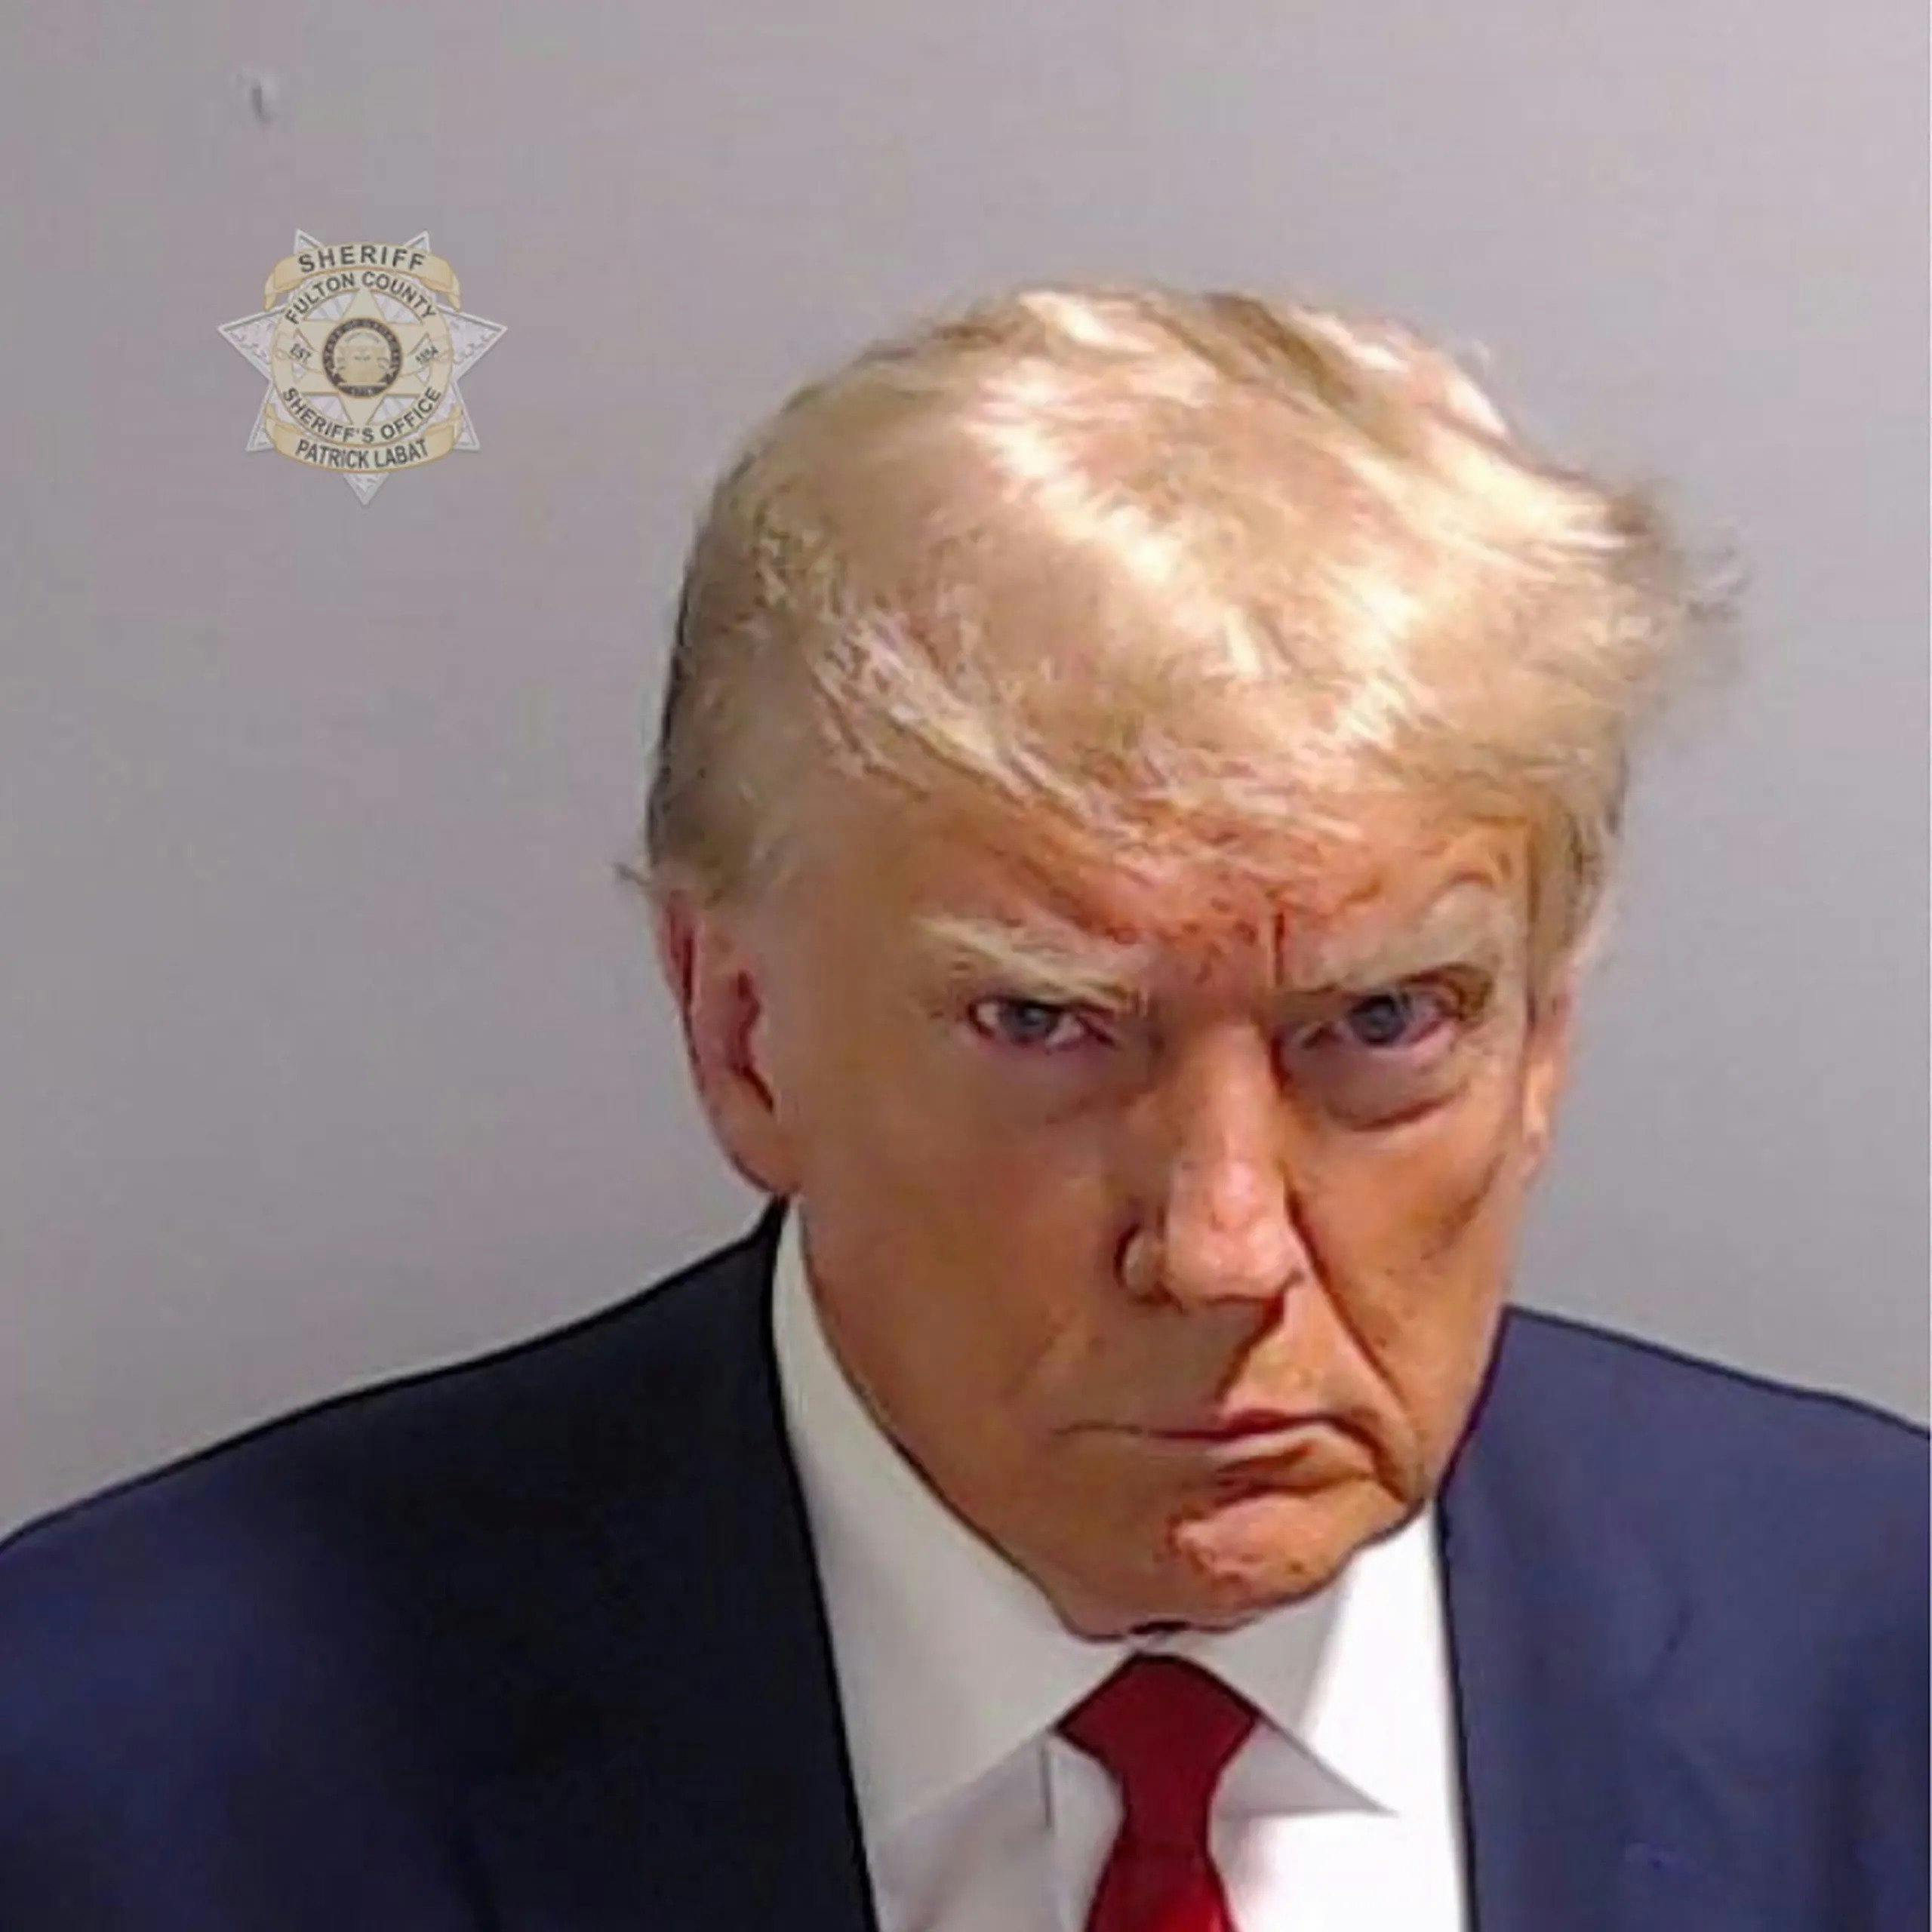 President Donald Trump mugshot